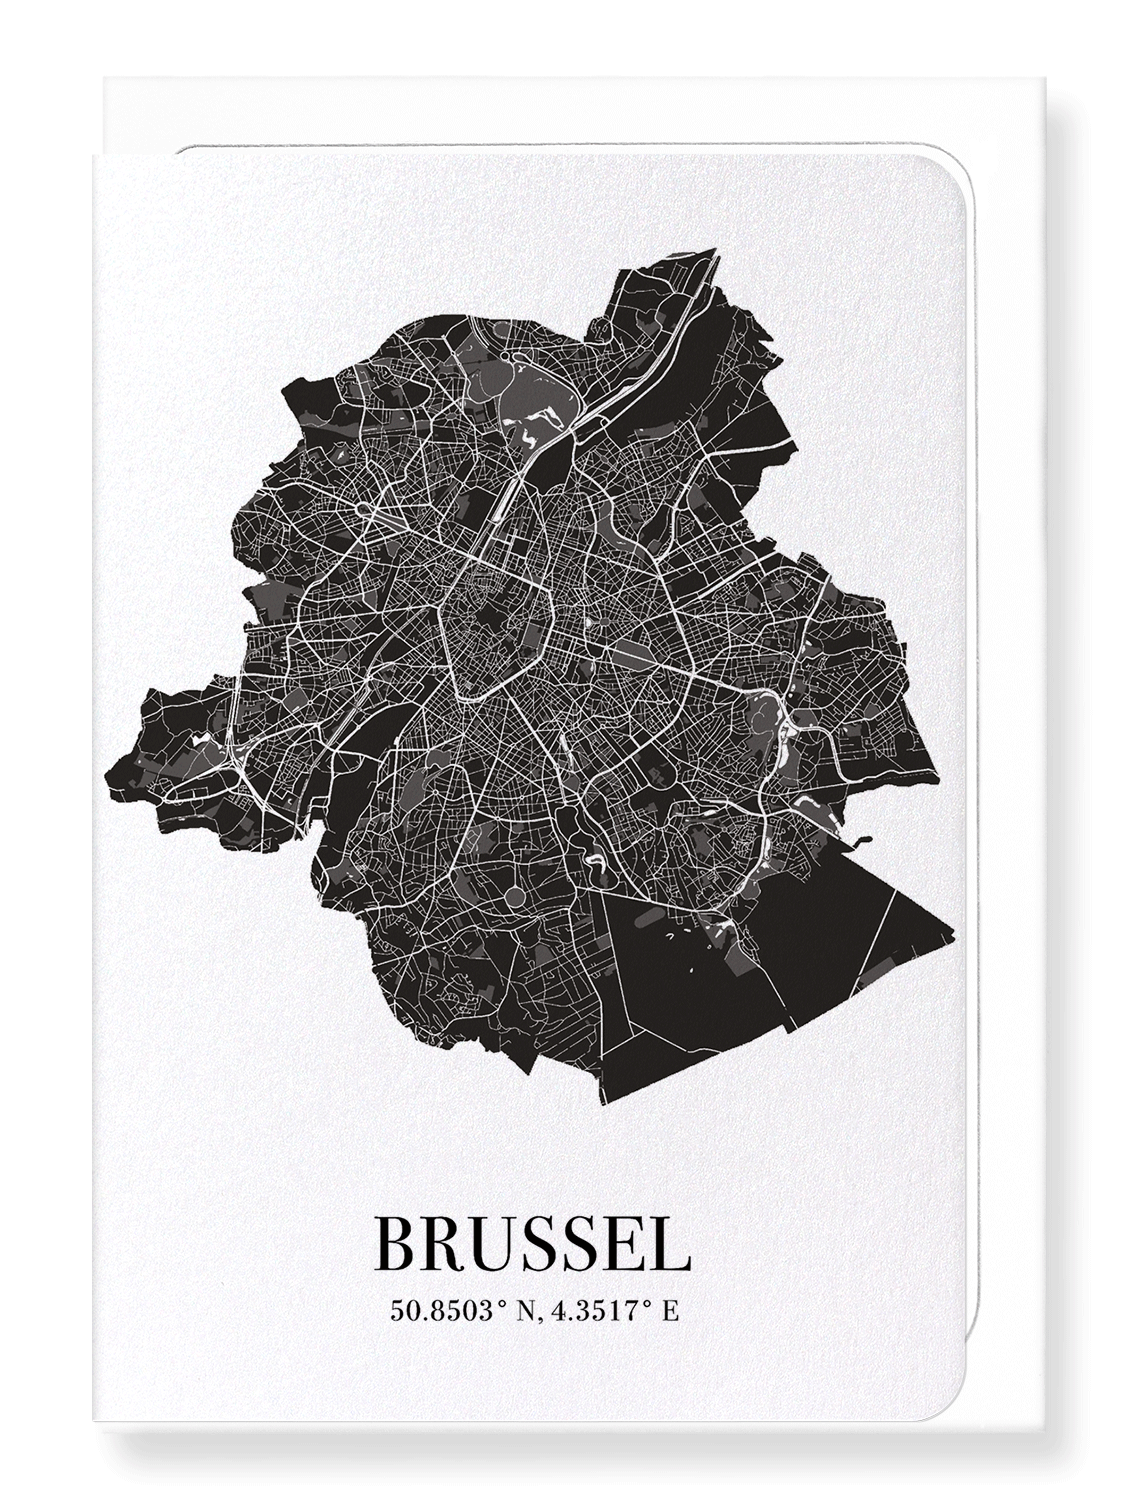 BRUSSELS CUTOUT: Map Cutout Greeting Card